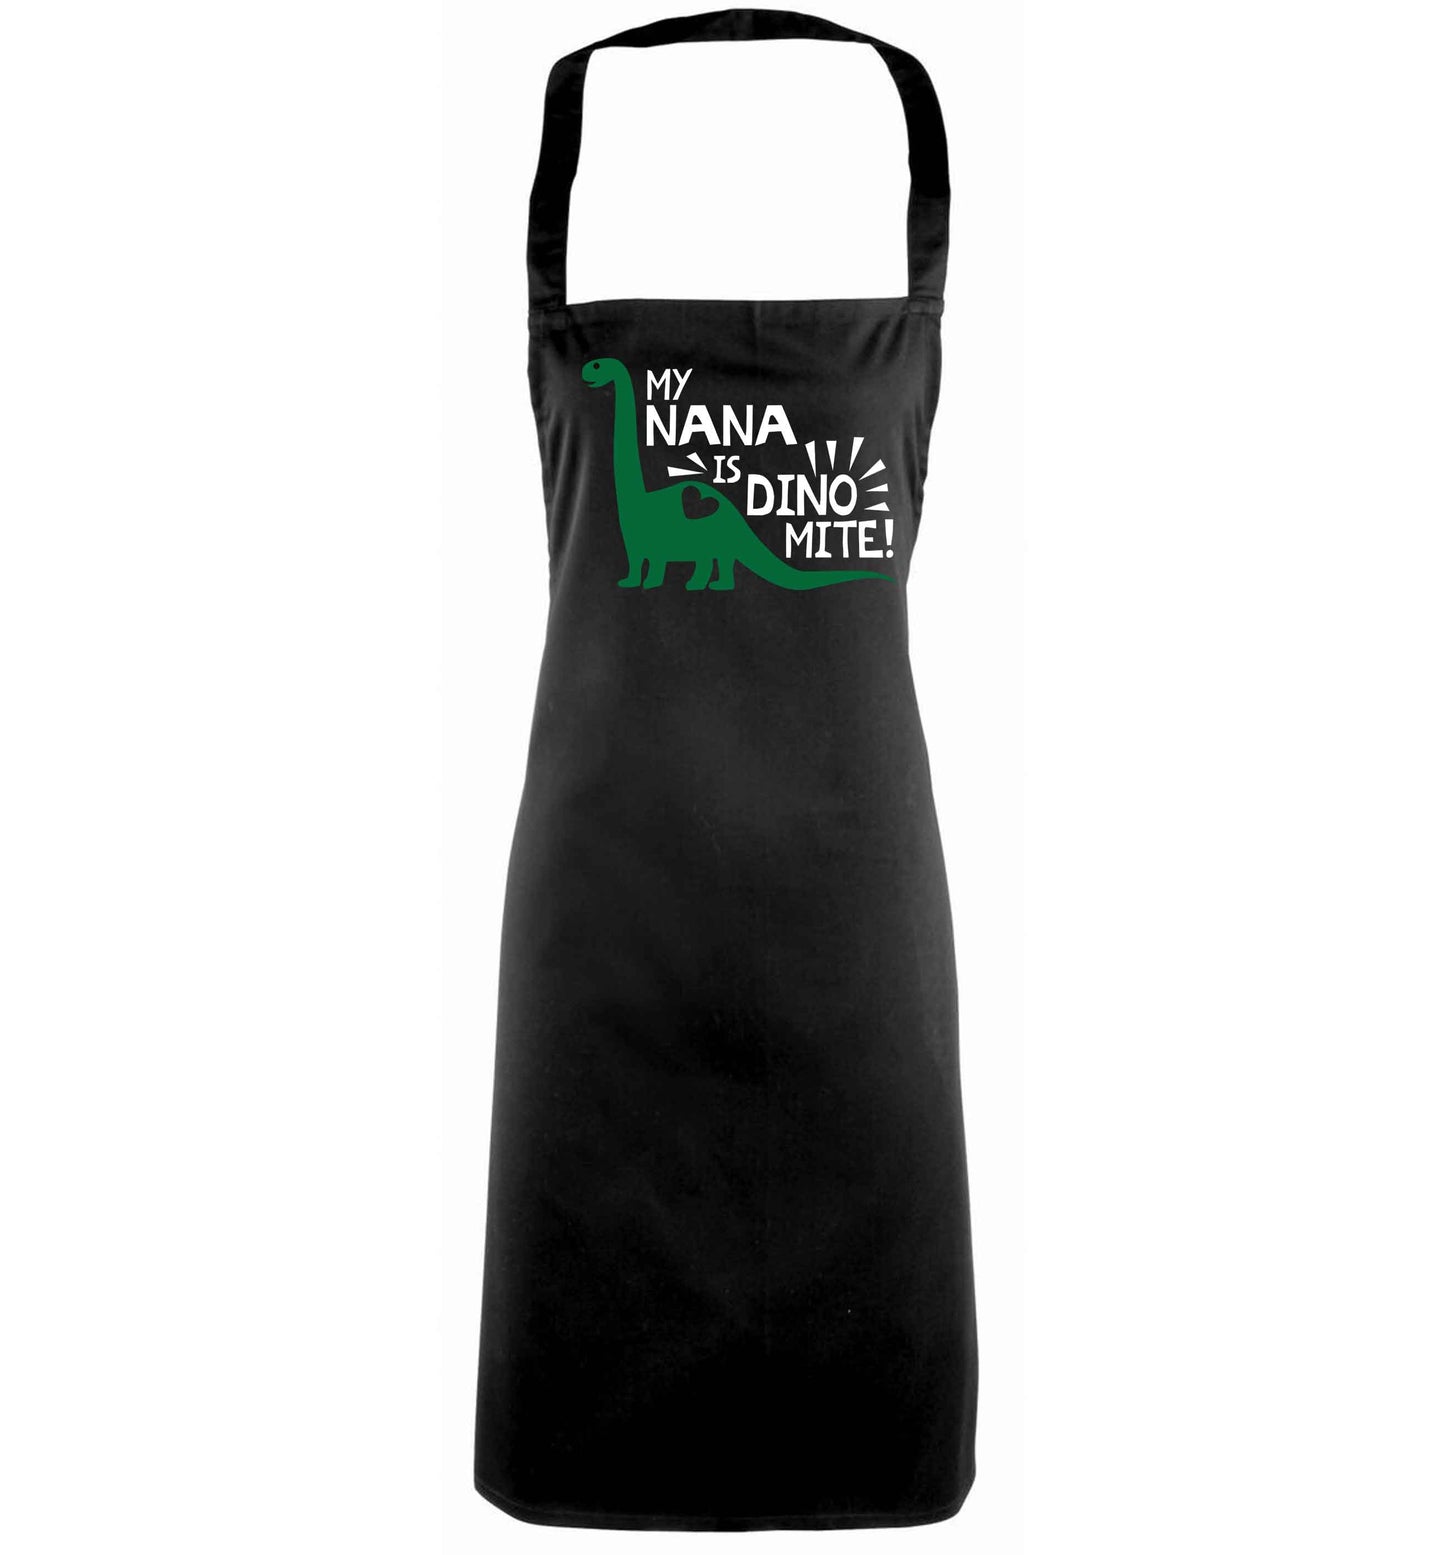 My nana is dinomite! black apron